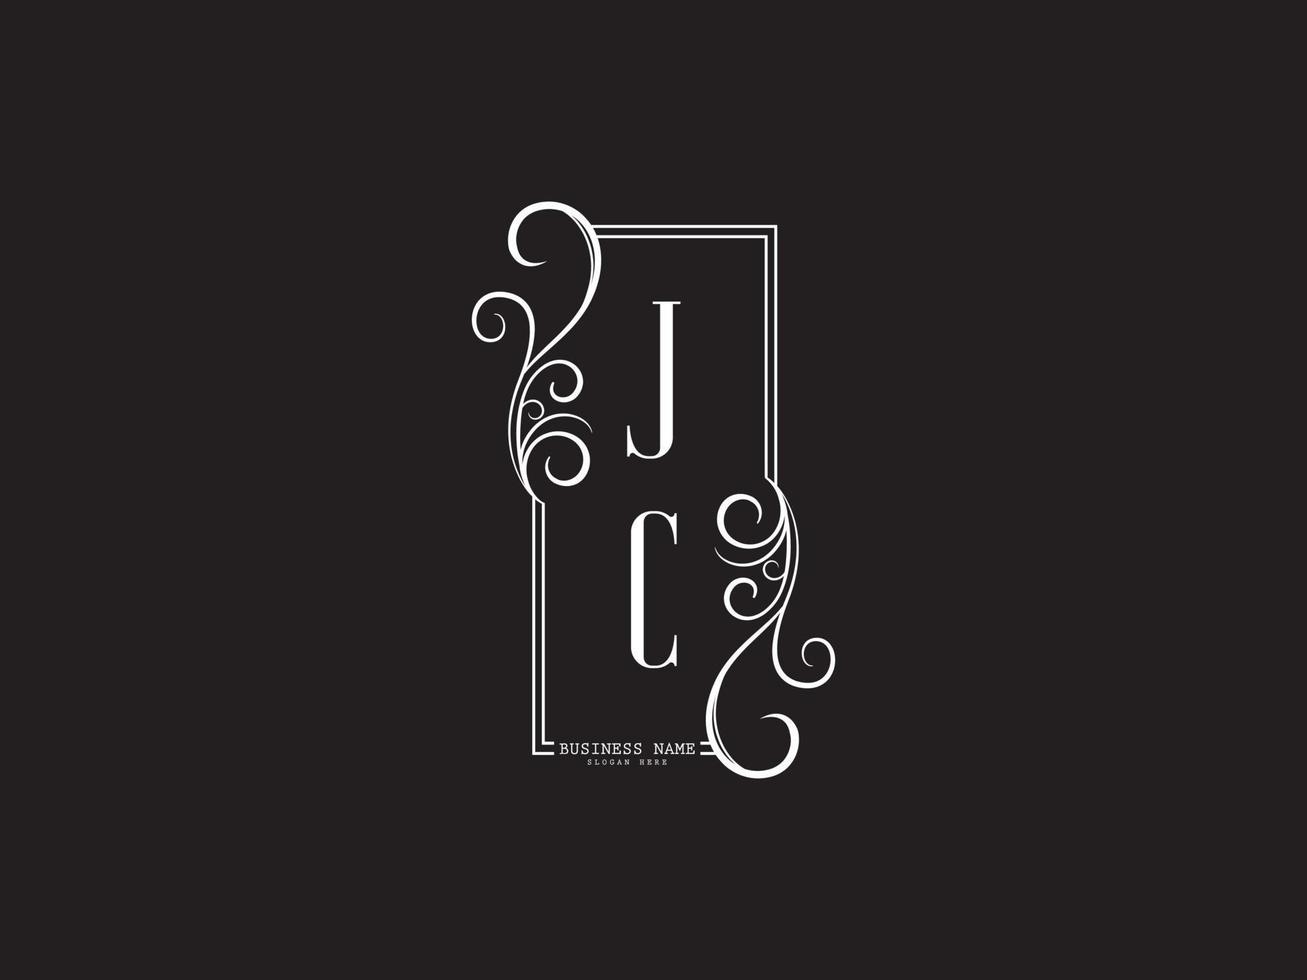 Initialen jc cj Logo-Symbol, kreatives jc Luxus-Buchstaben-Logo-Bilddesign vektor